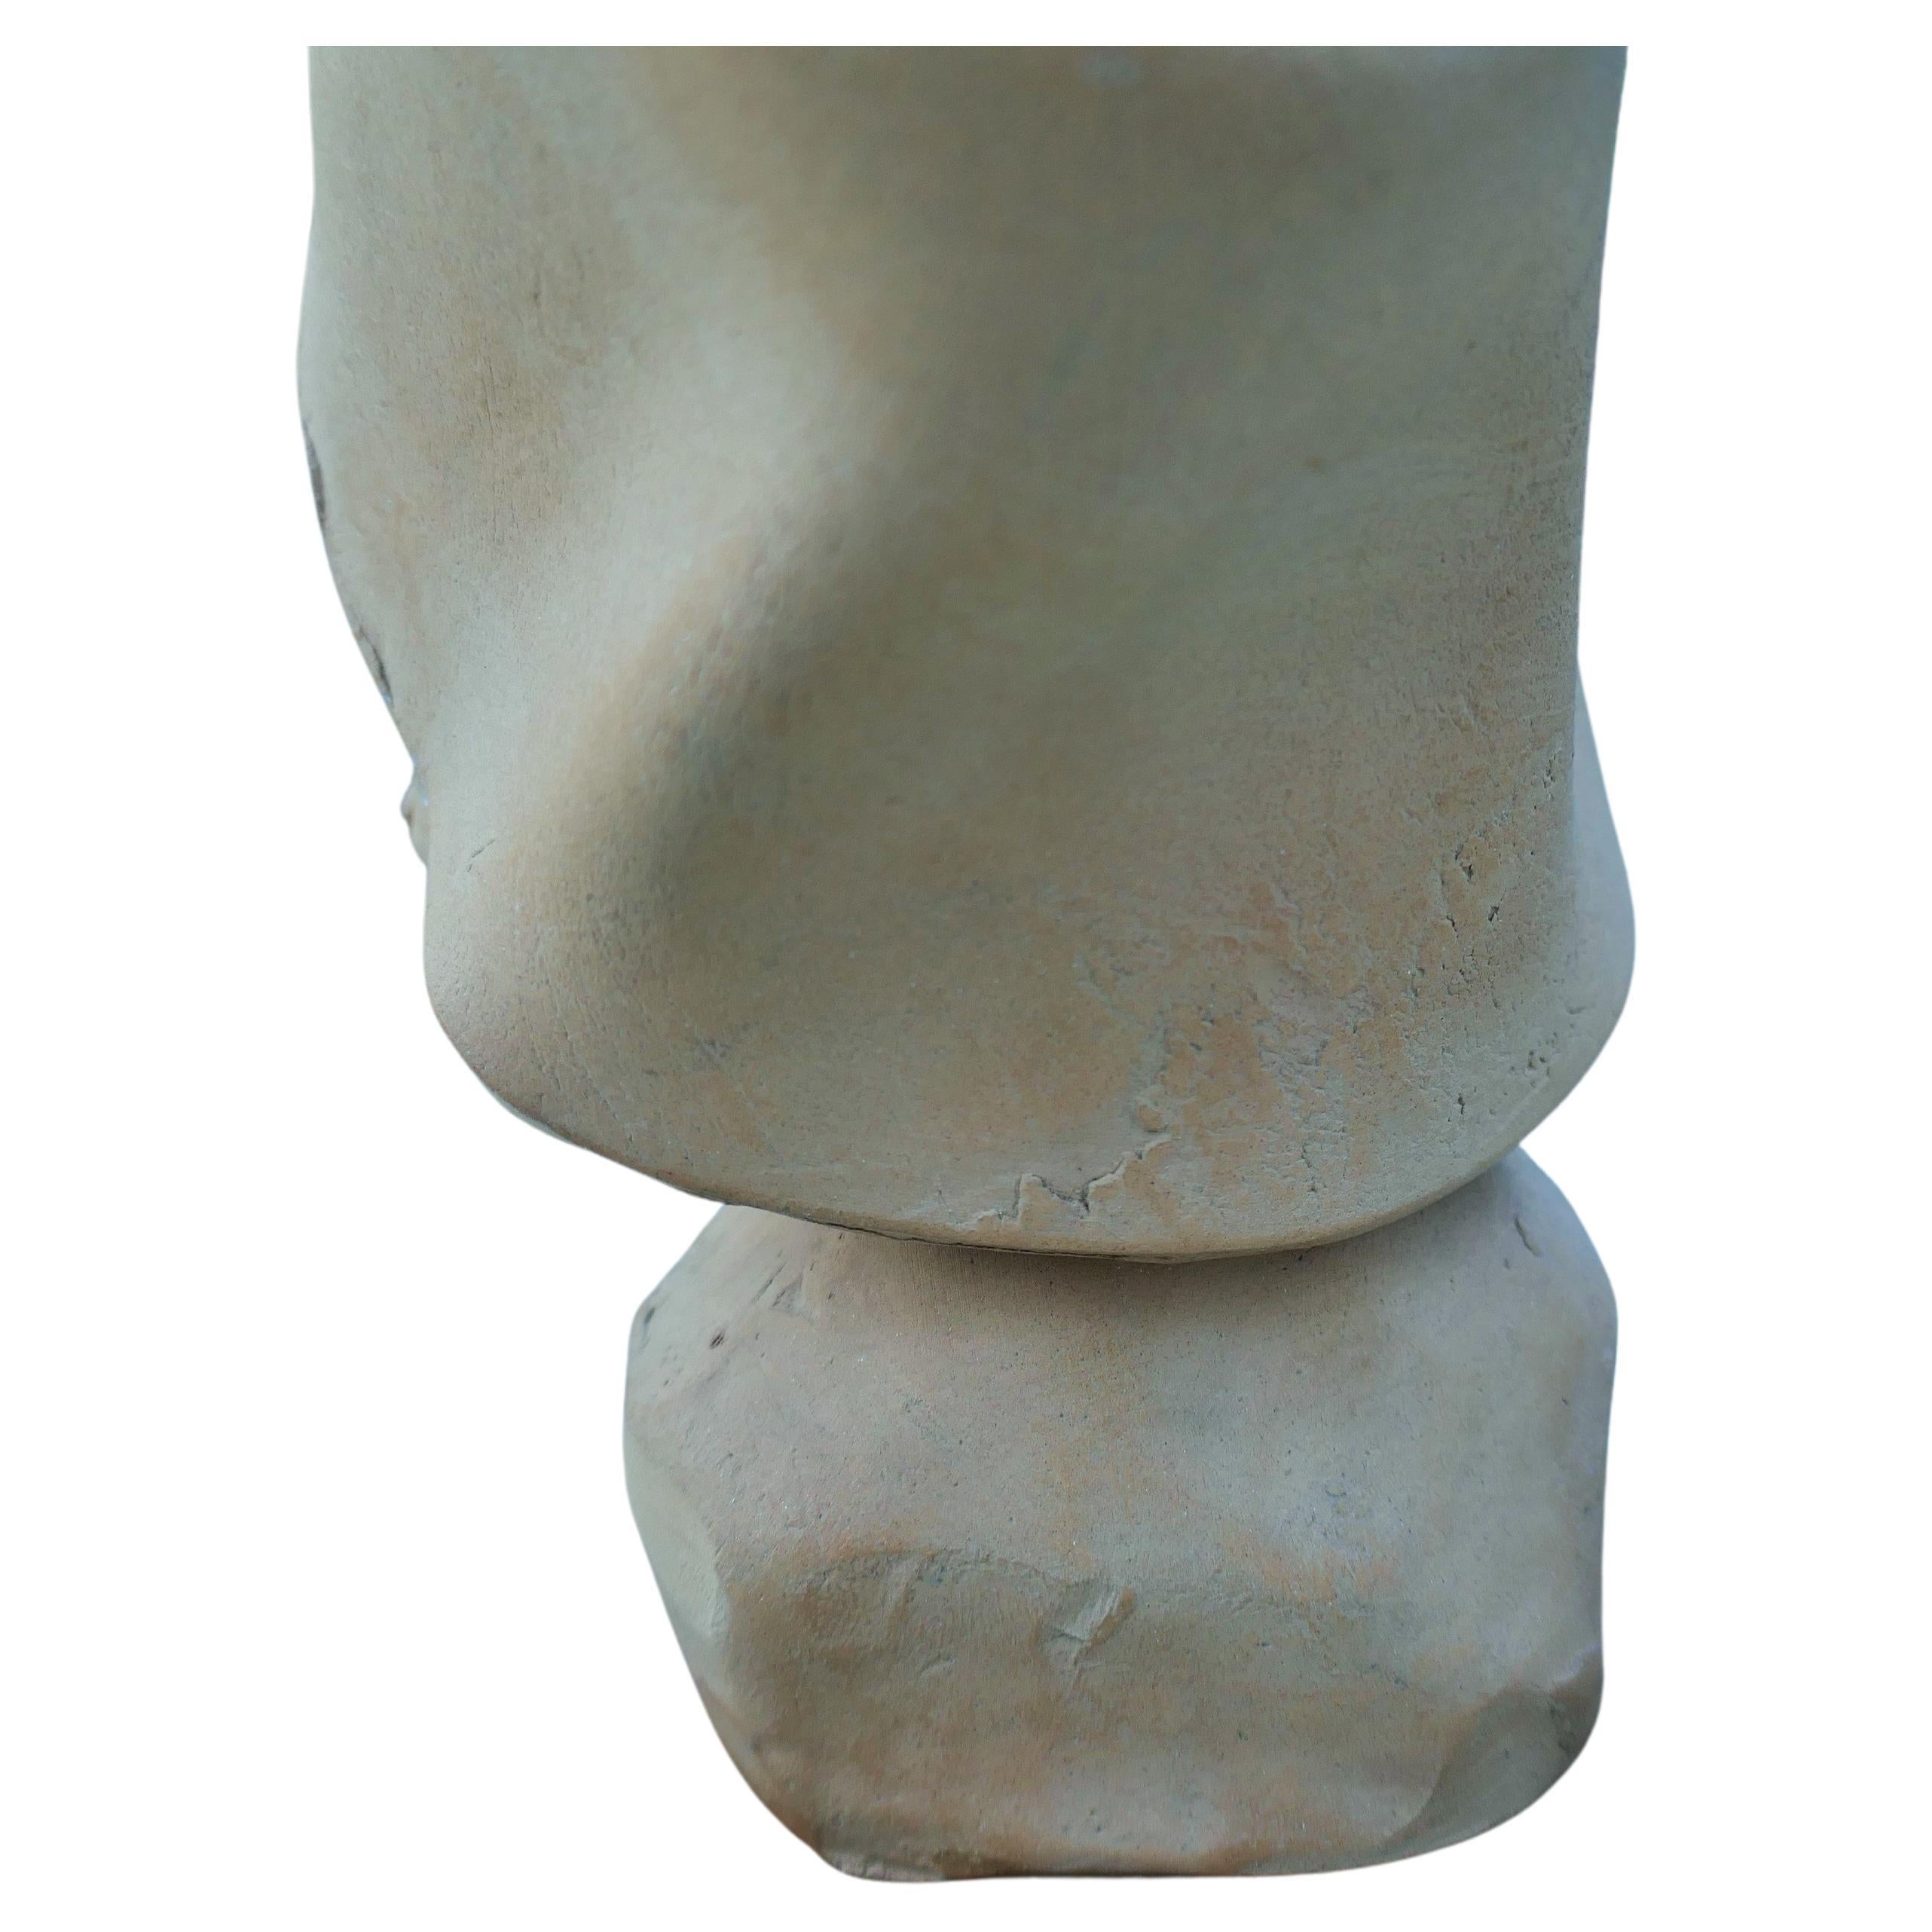 Terracotta face, possible Sardinian craftsmanship For Sale 8